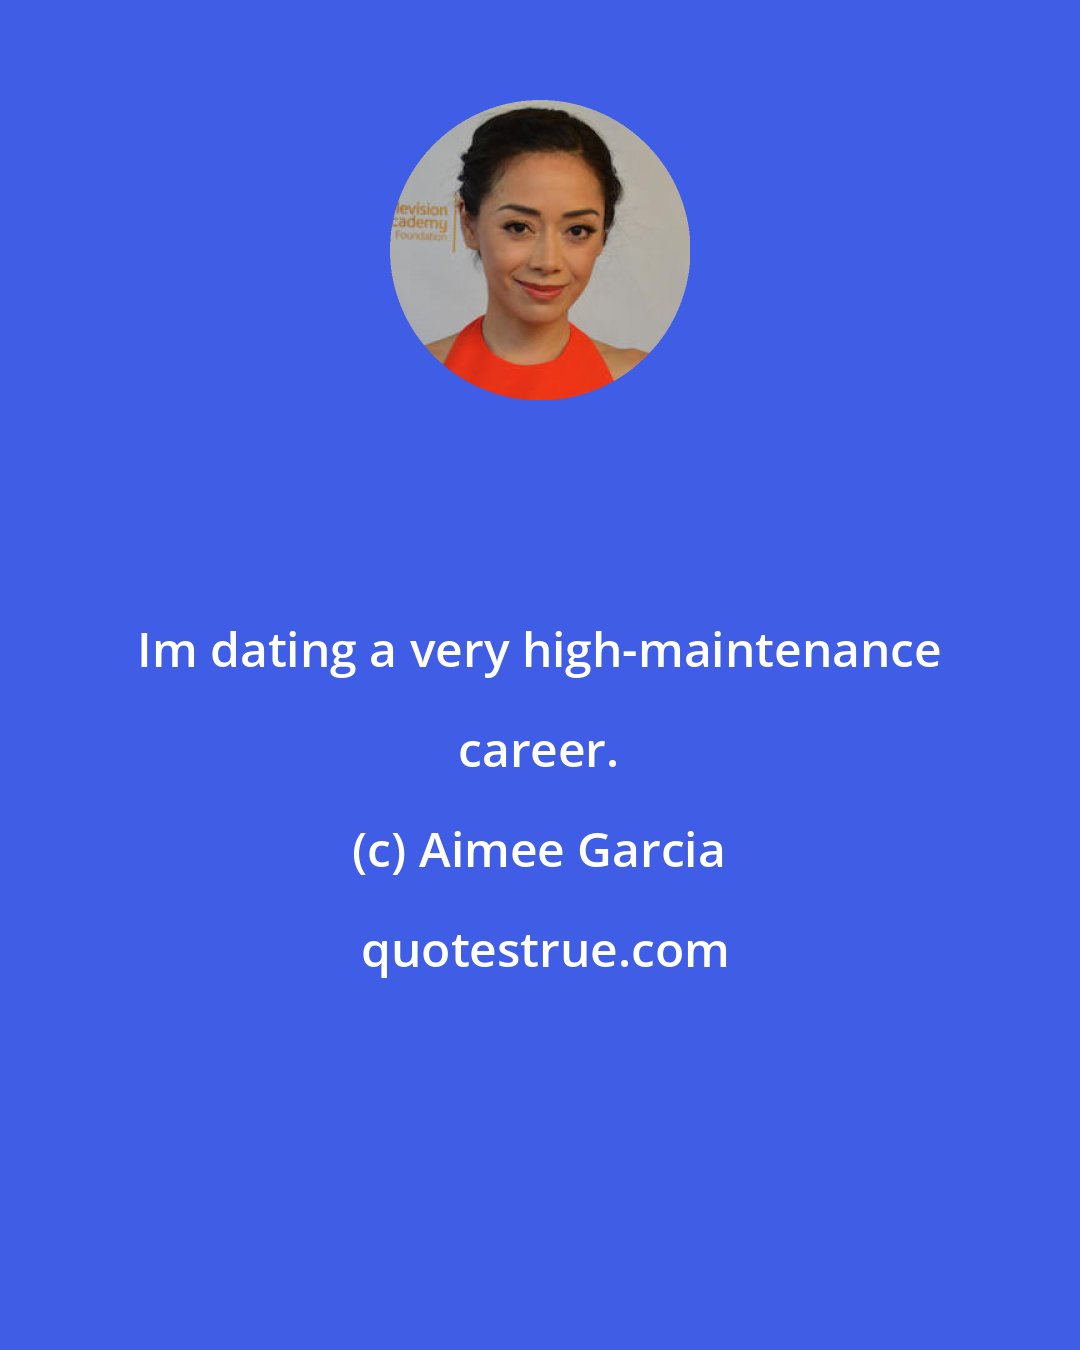 Aimee Garcia: Im dating a very high-maintenance career.